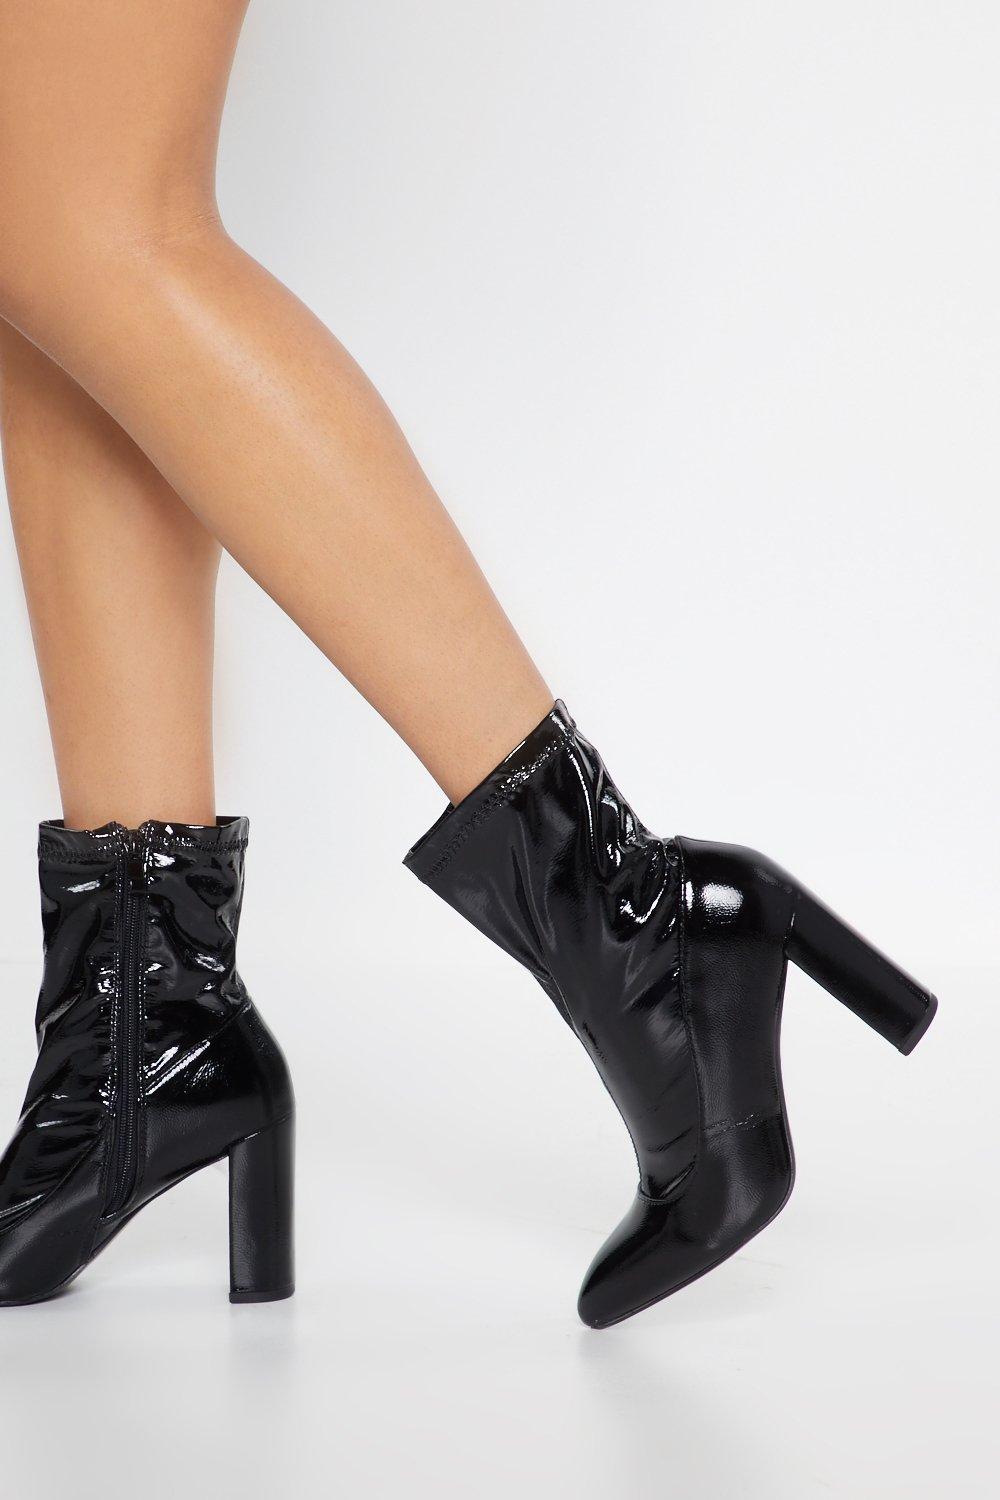 black patent block heel boots